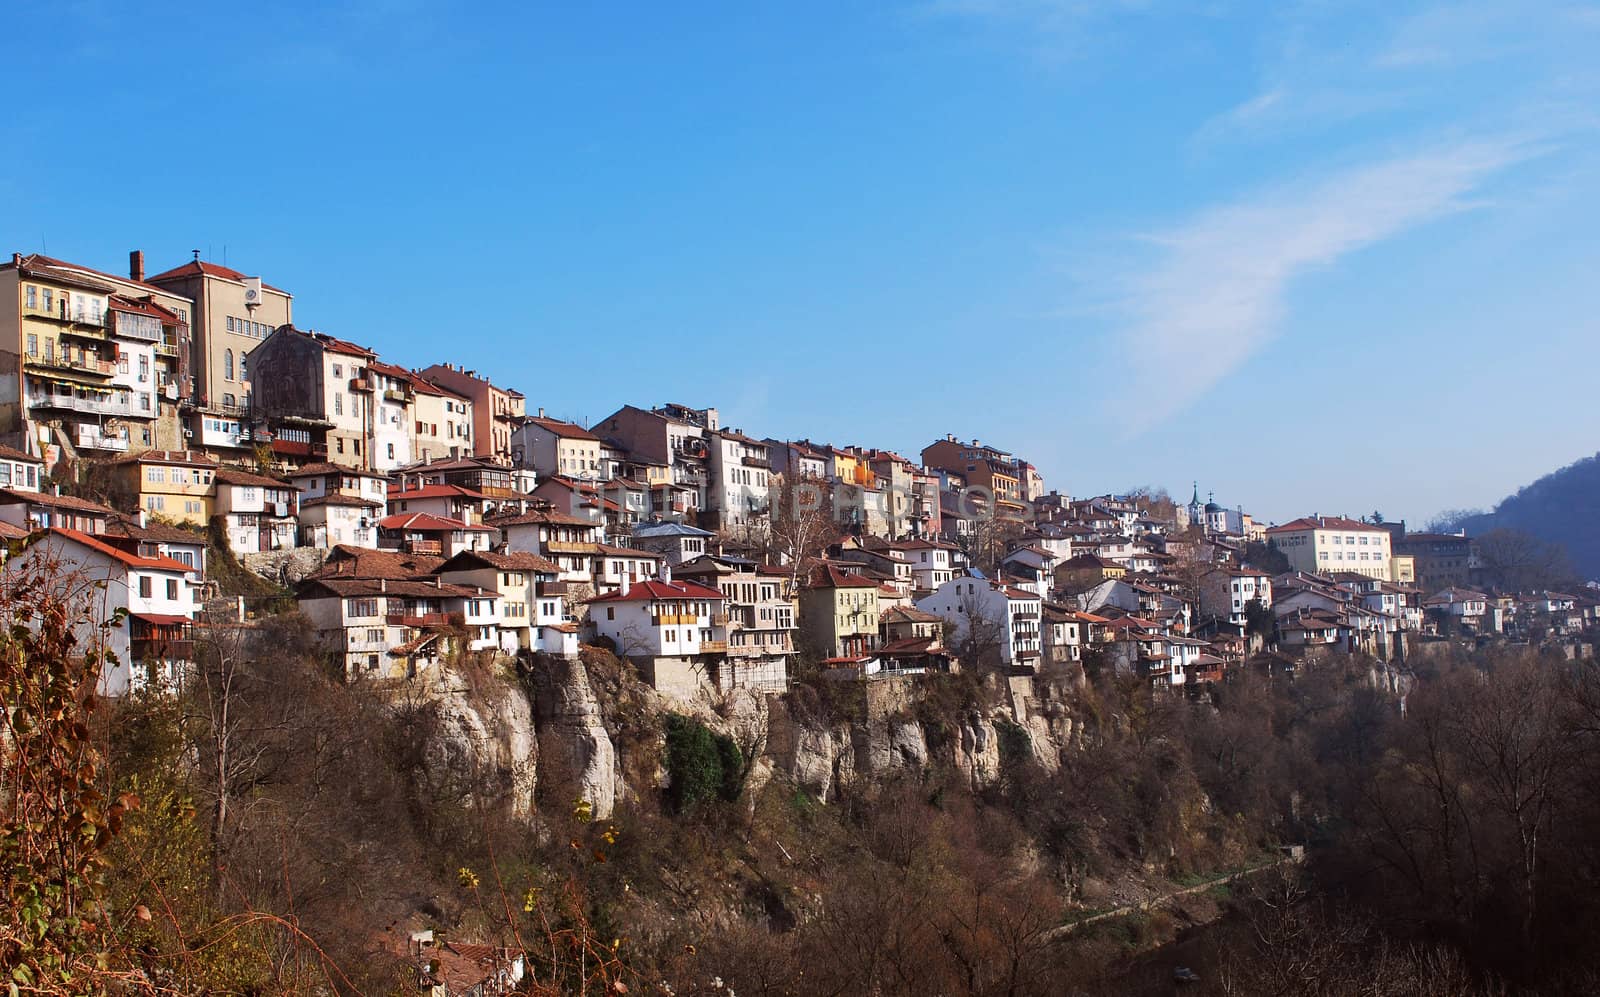 city view with old houses Veliko Turnovo Bulgaria